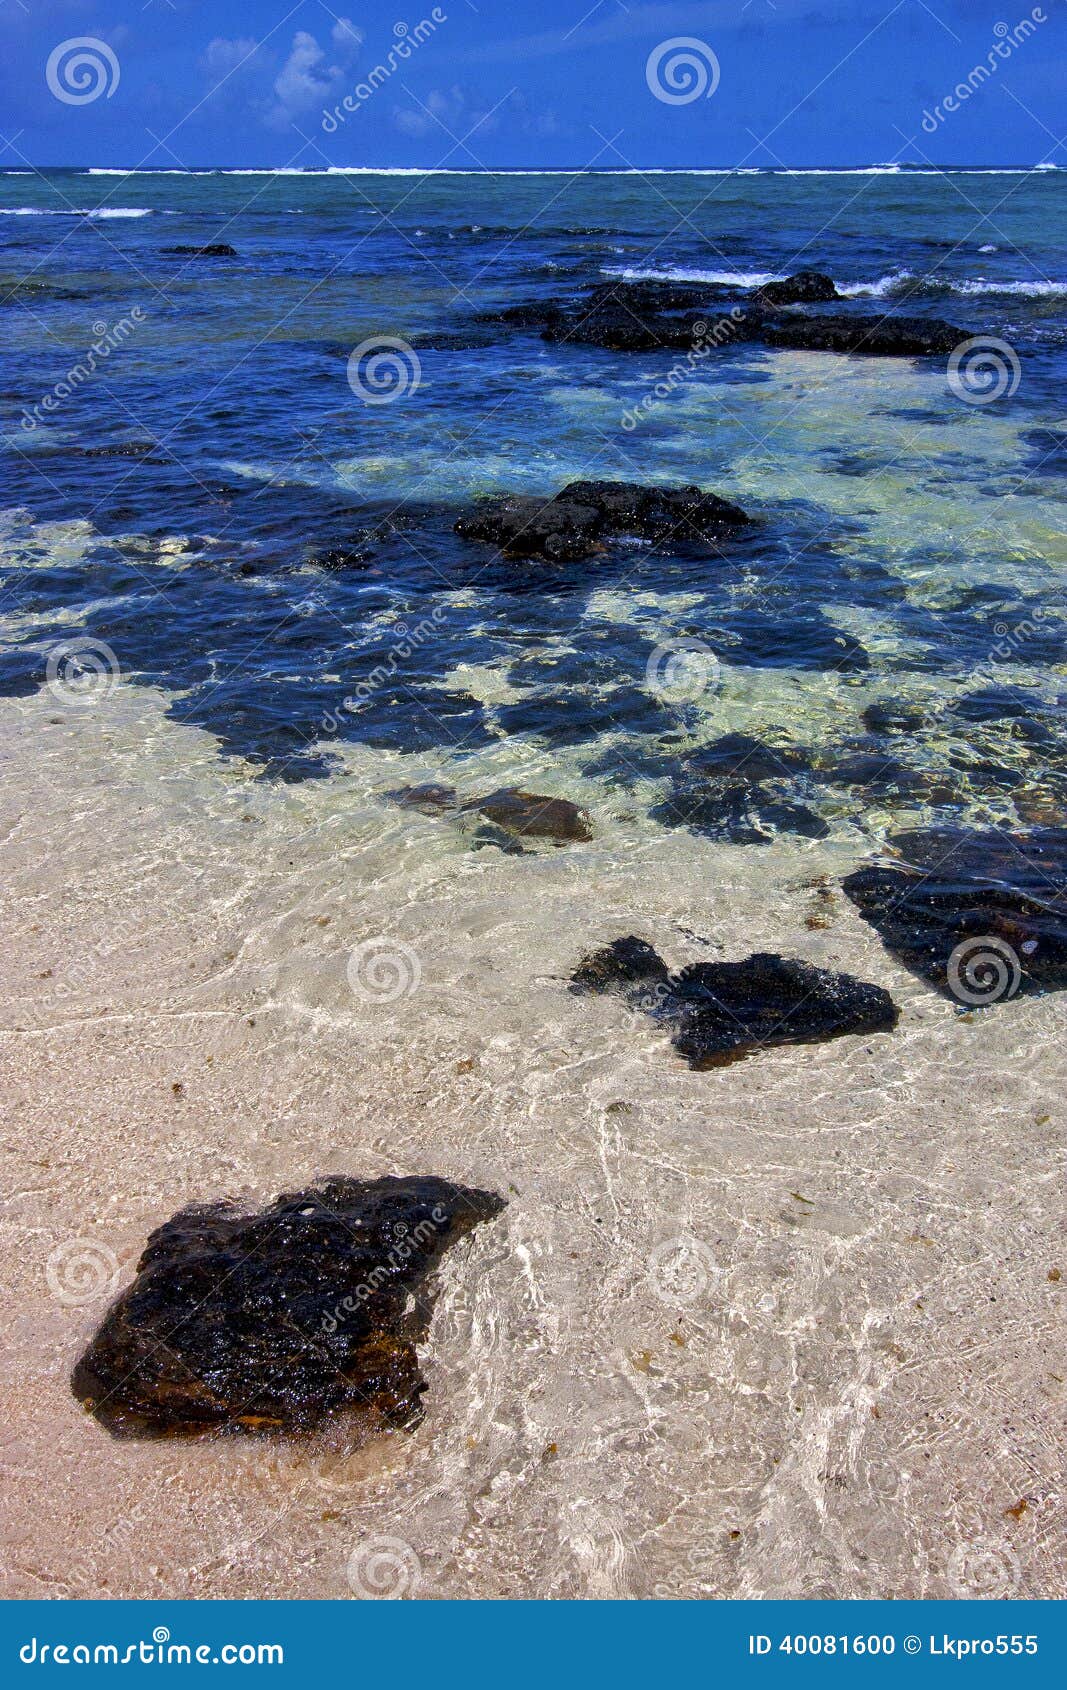 blue bay foam footstep indian ocean some deus cocos in mauriti